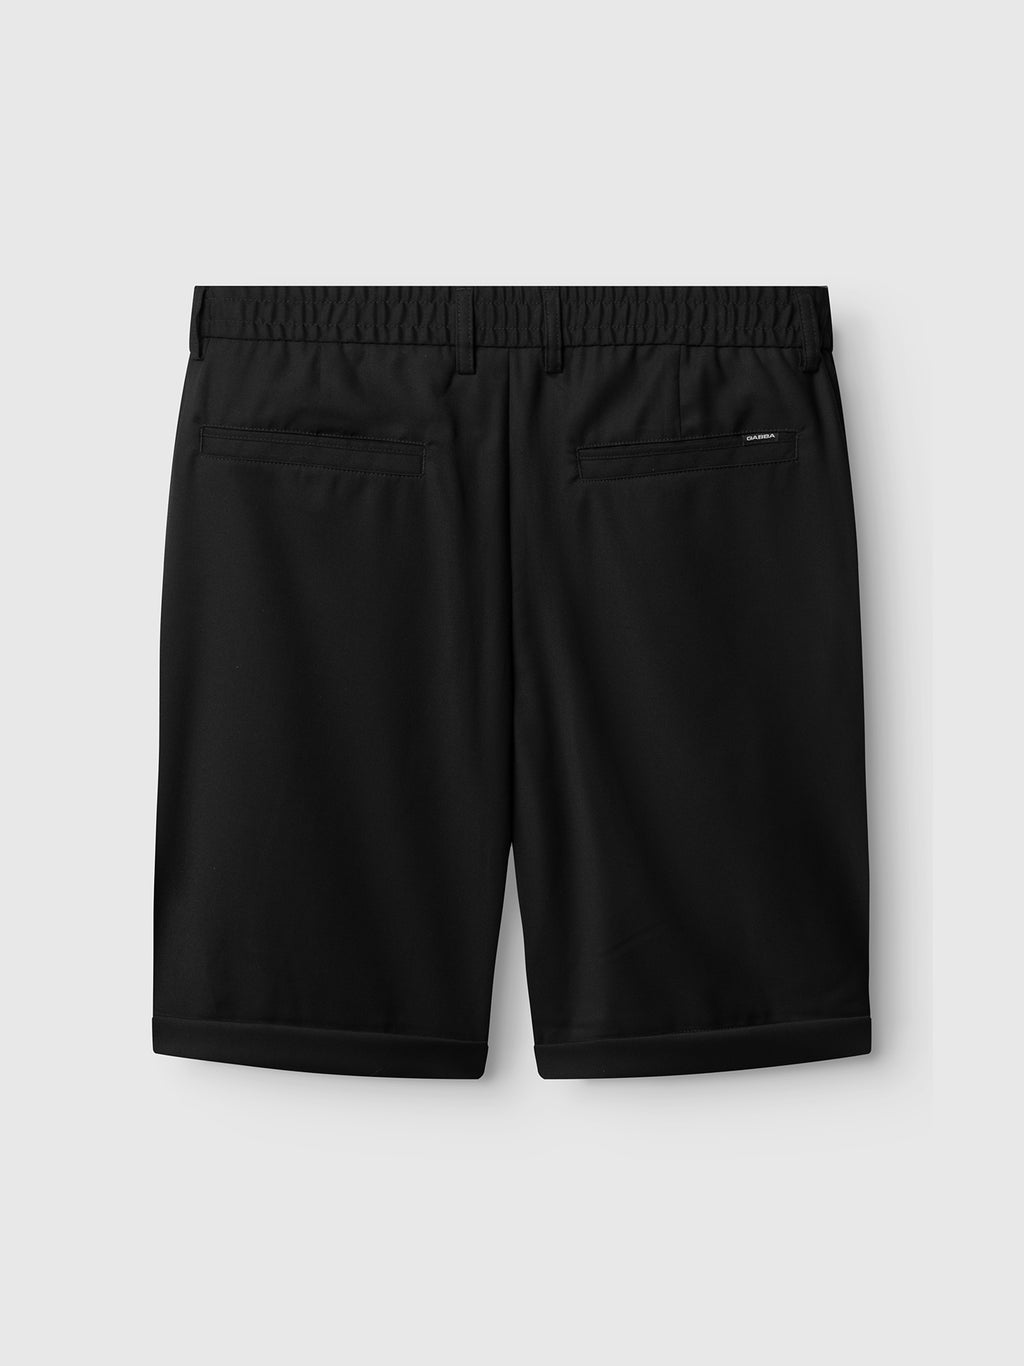 Monza Fin Shorts - Navy